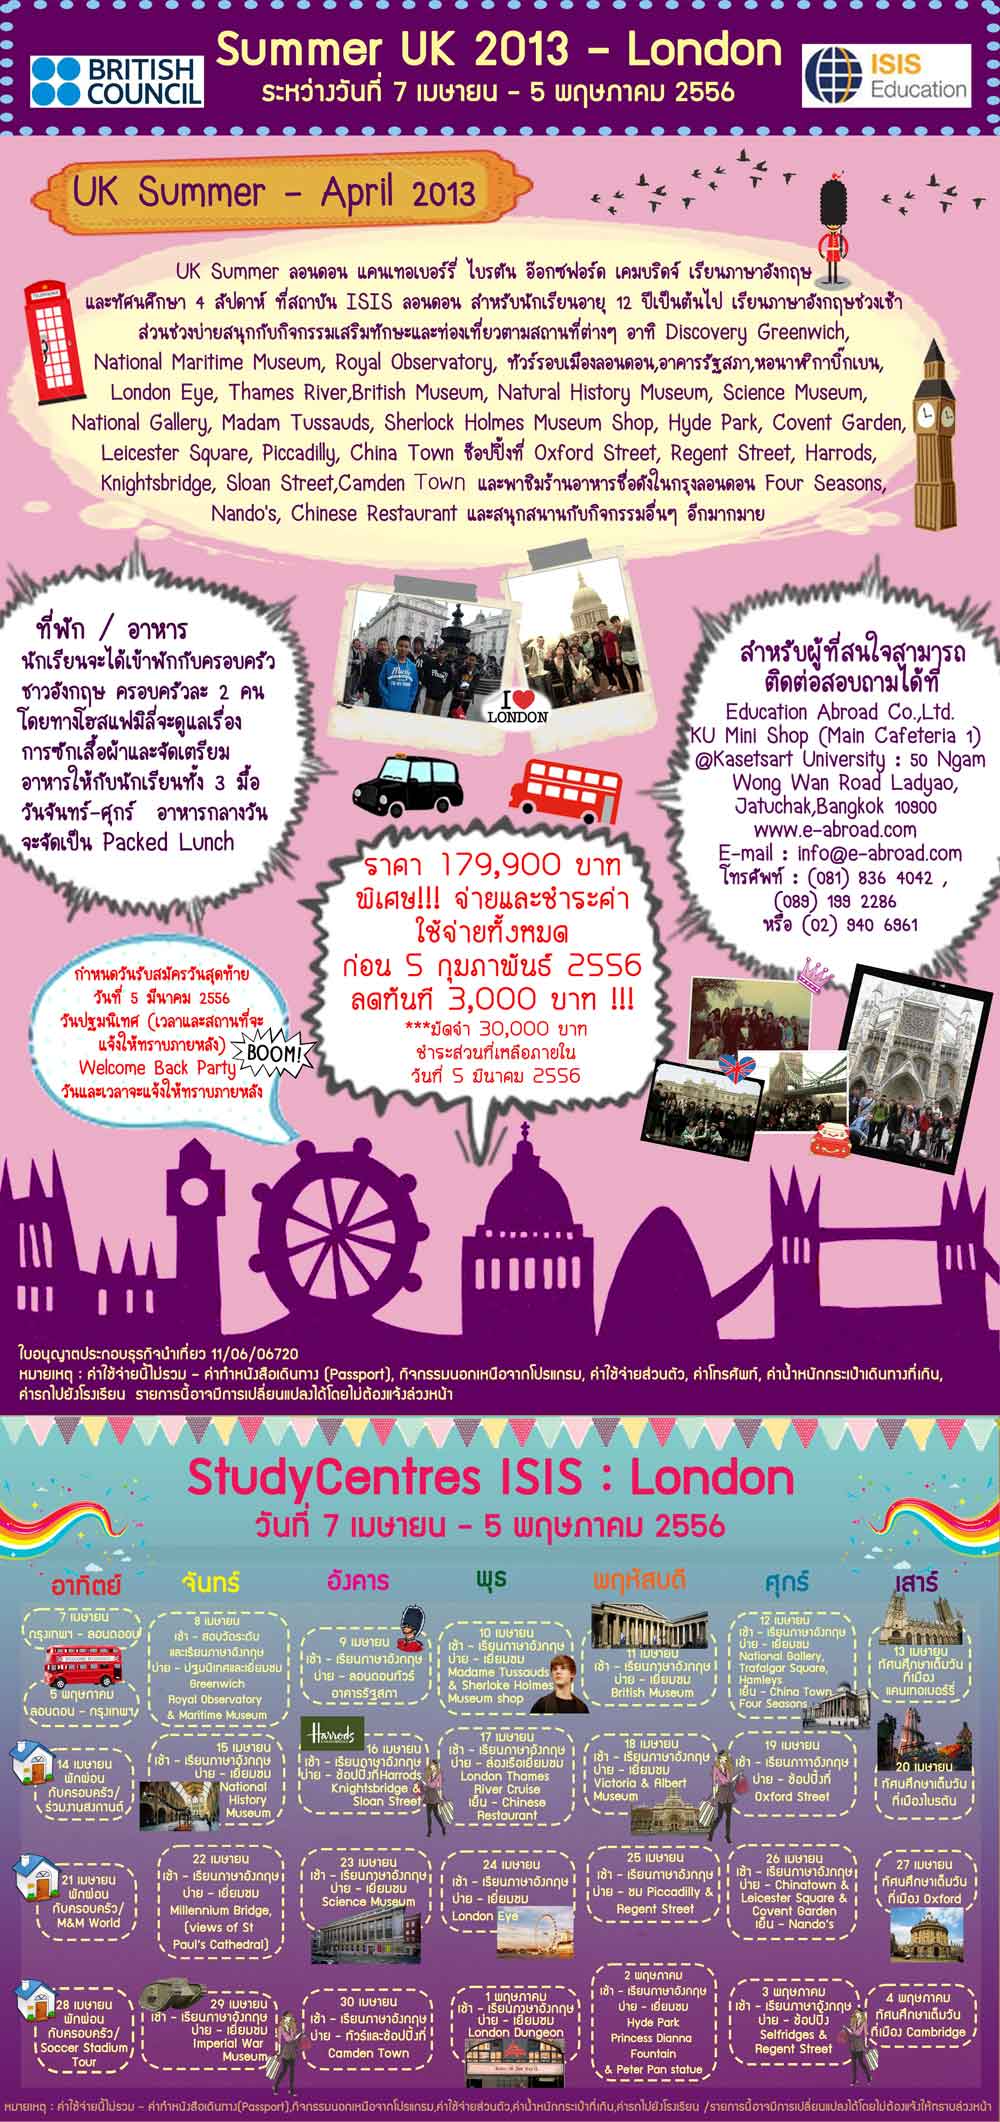 Summer UK 2013 - เรียนภาษาอังกฤษและทัศนศึกษา 4 สัปดาห์ (ระหว่างวันที่ 7 เมษายน - 5 พฤษภาคม 2556) ลอนดอน ประเทศอังกฤษ รูปที่ 1